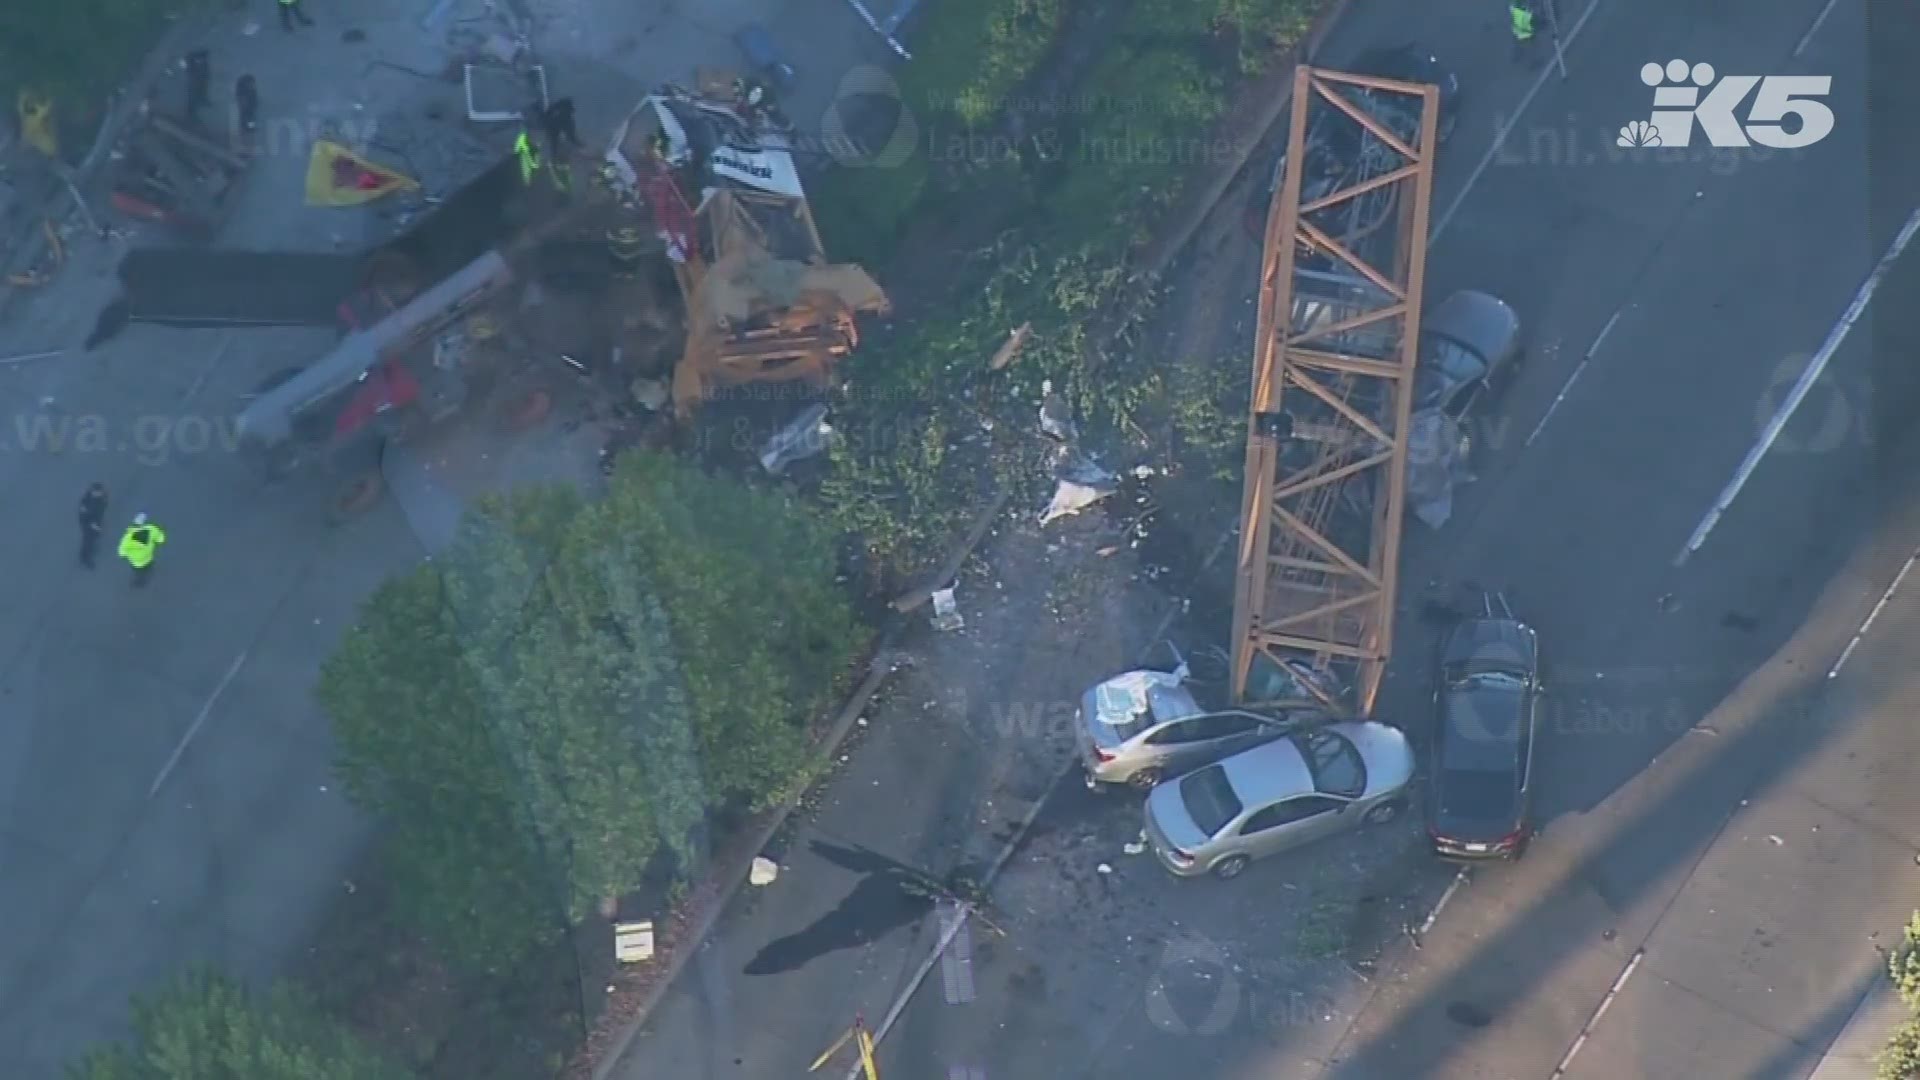 Washington L & I director Joel Sacks discusses the investigation into April's Seattle crane collapse